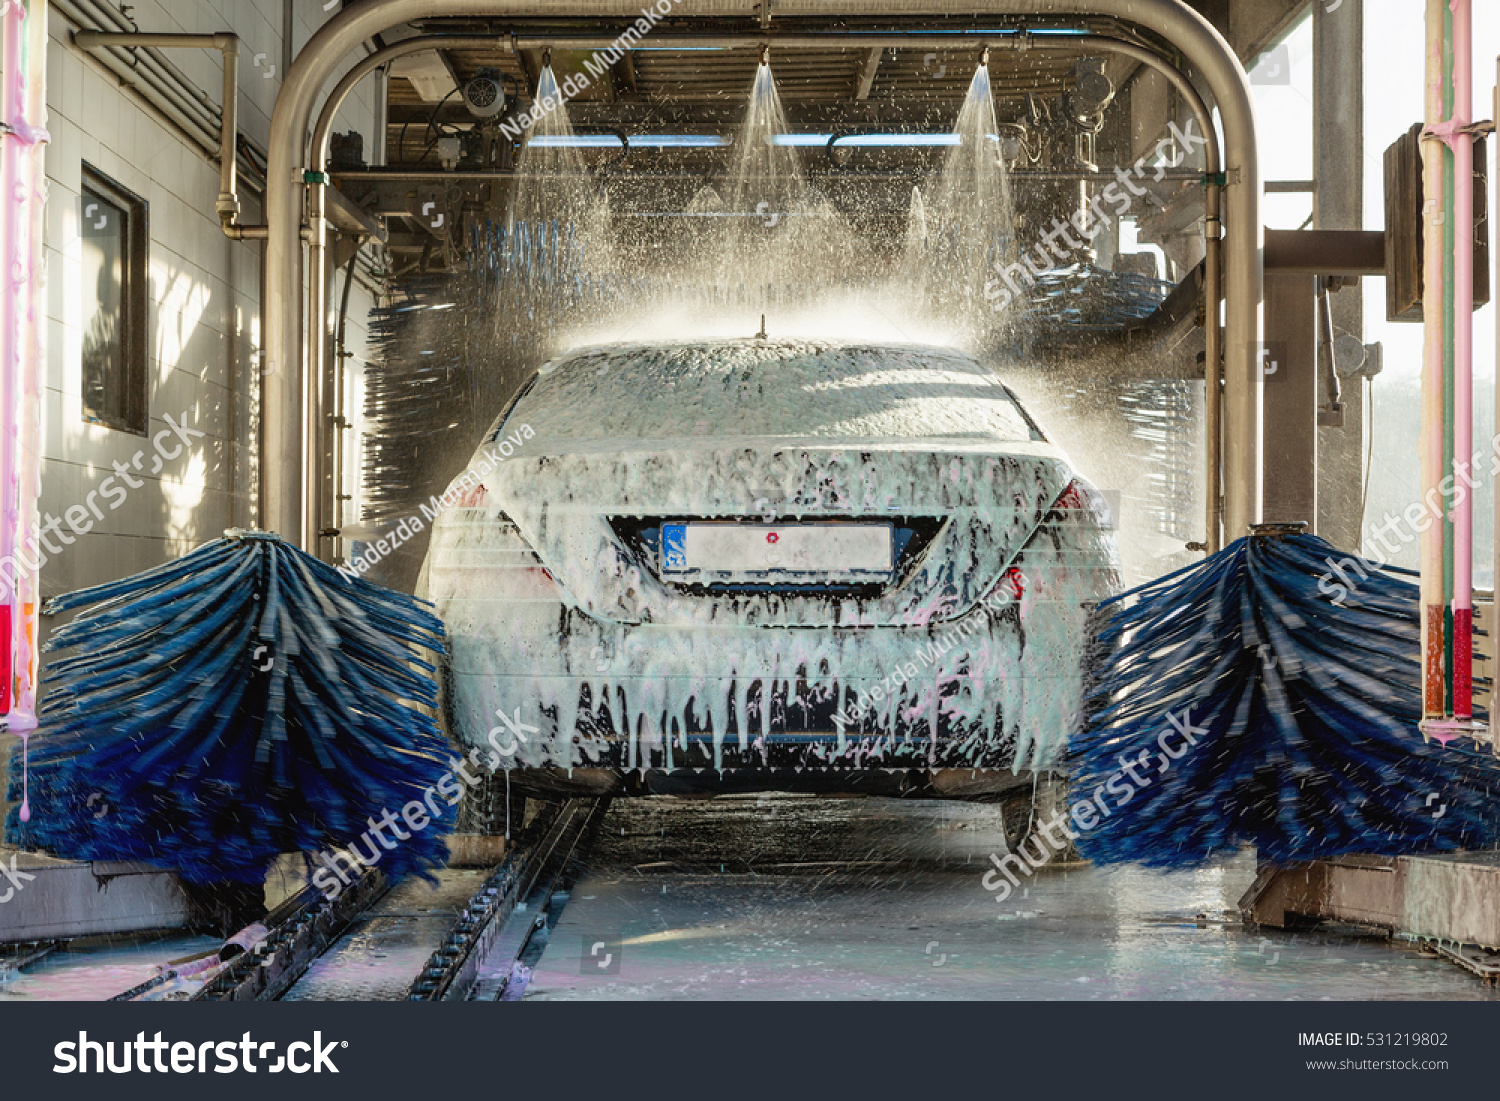 car wash, car wash foam water, Automatic car wash in action #531219802